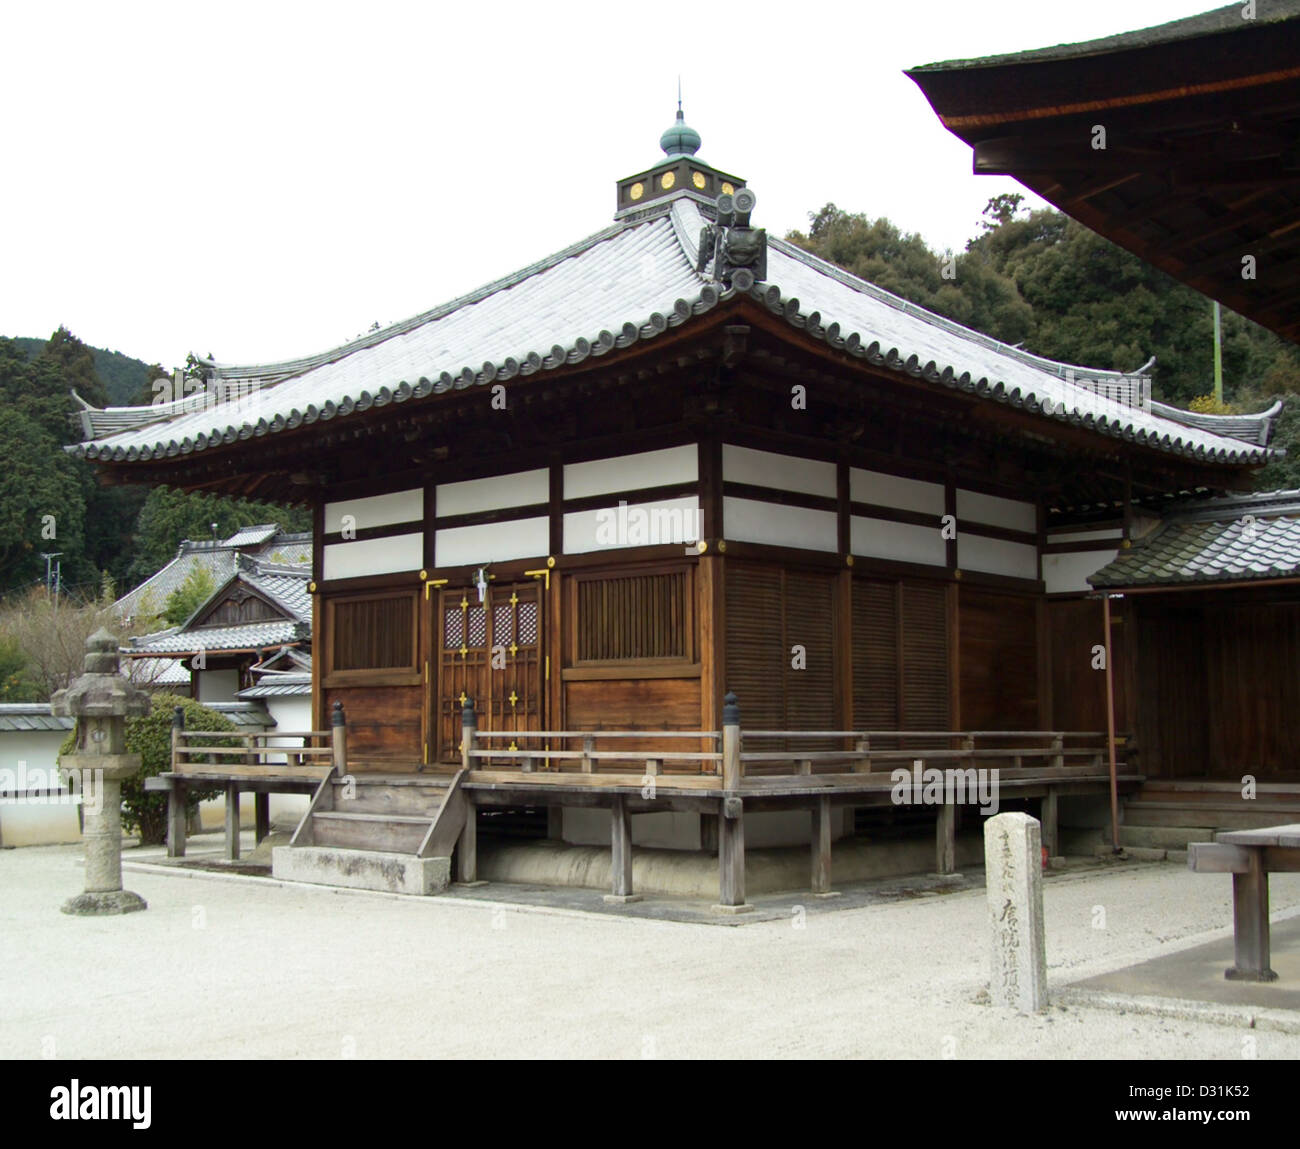 Chōnichi Goma-dō 長日護摩堂 in the Tō-in 唐院 at Mii-dera, a Buddhist temple in Otsu, Shiga Prefecture, Japan Stock Photo